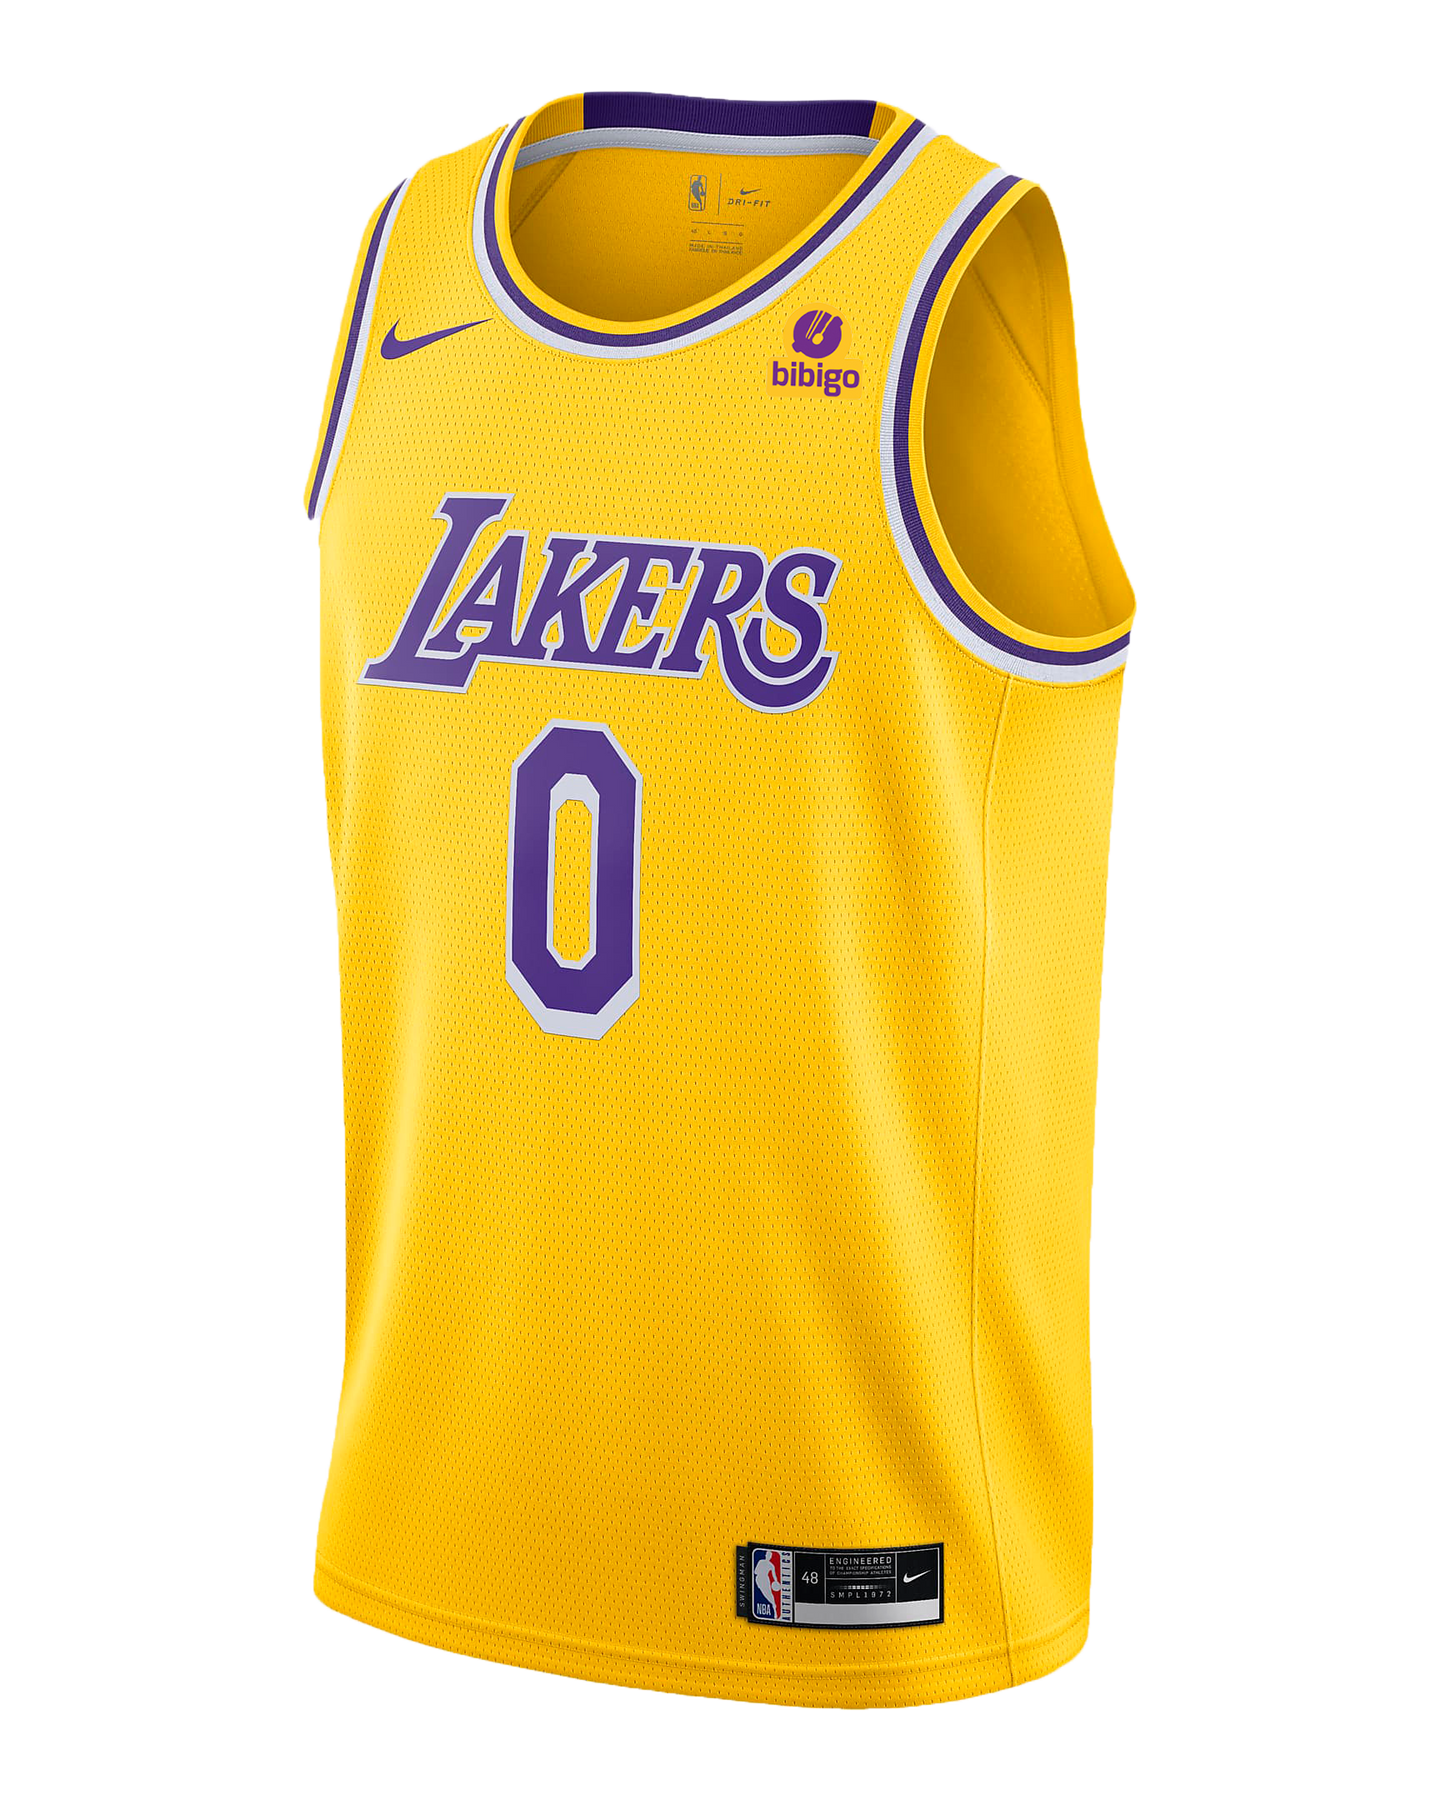 Nba Lakers Russell Westbrook No. 0 Basketball Uniform Jersey